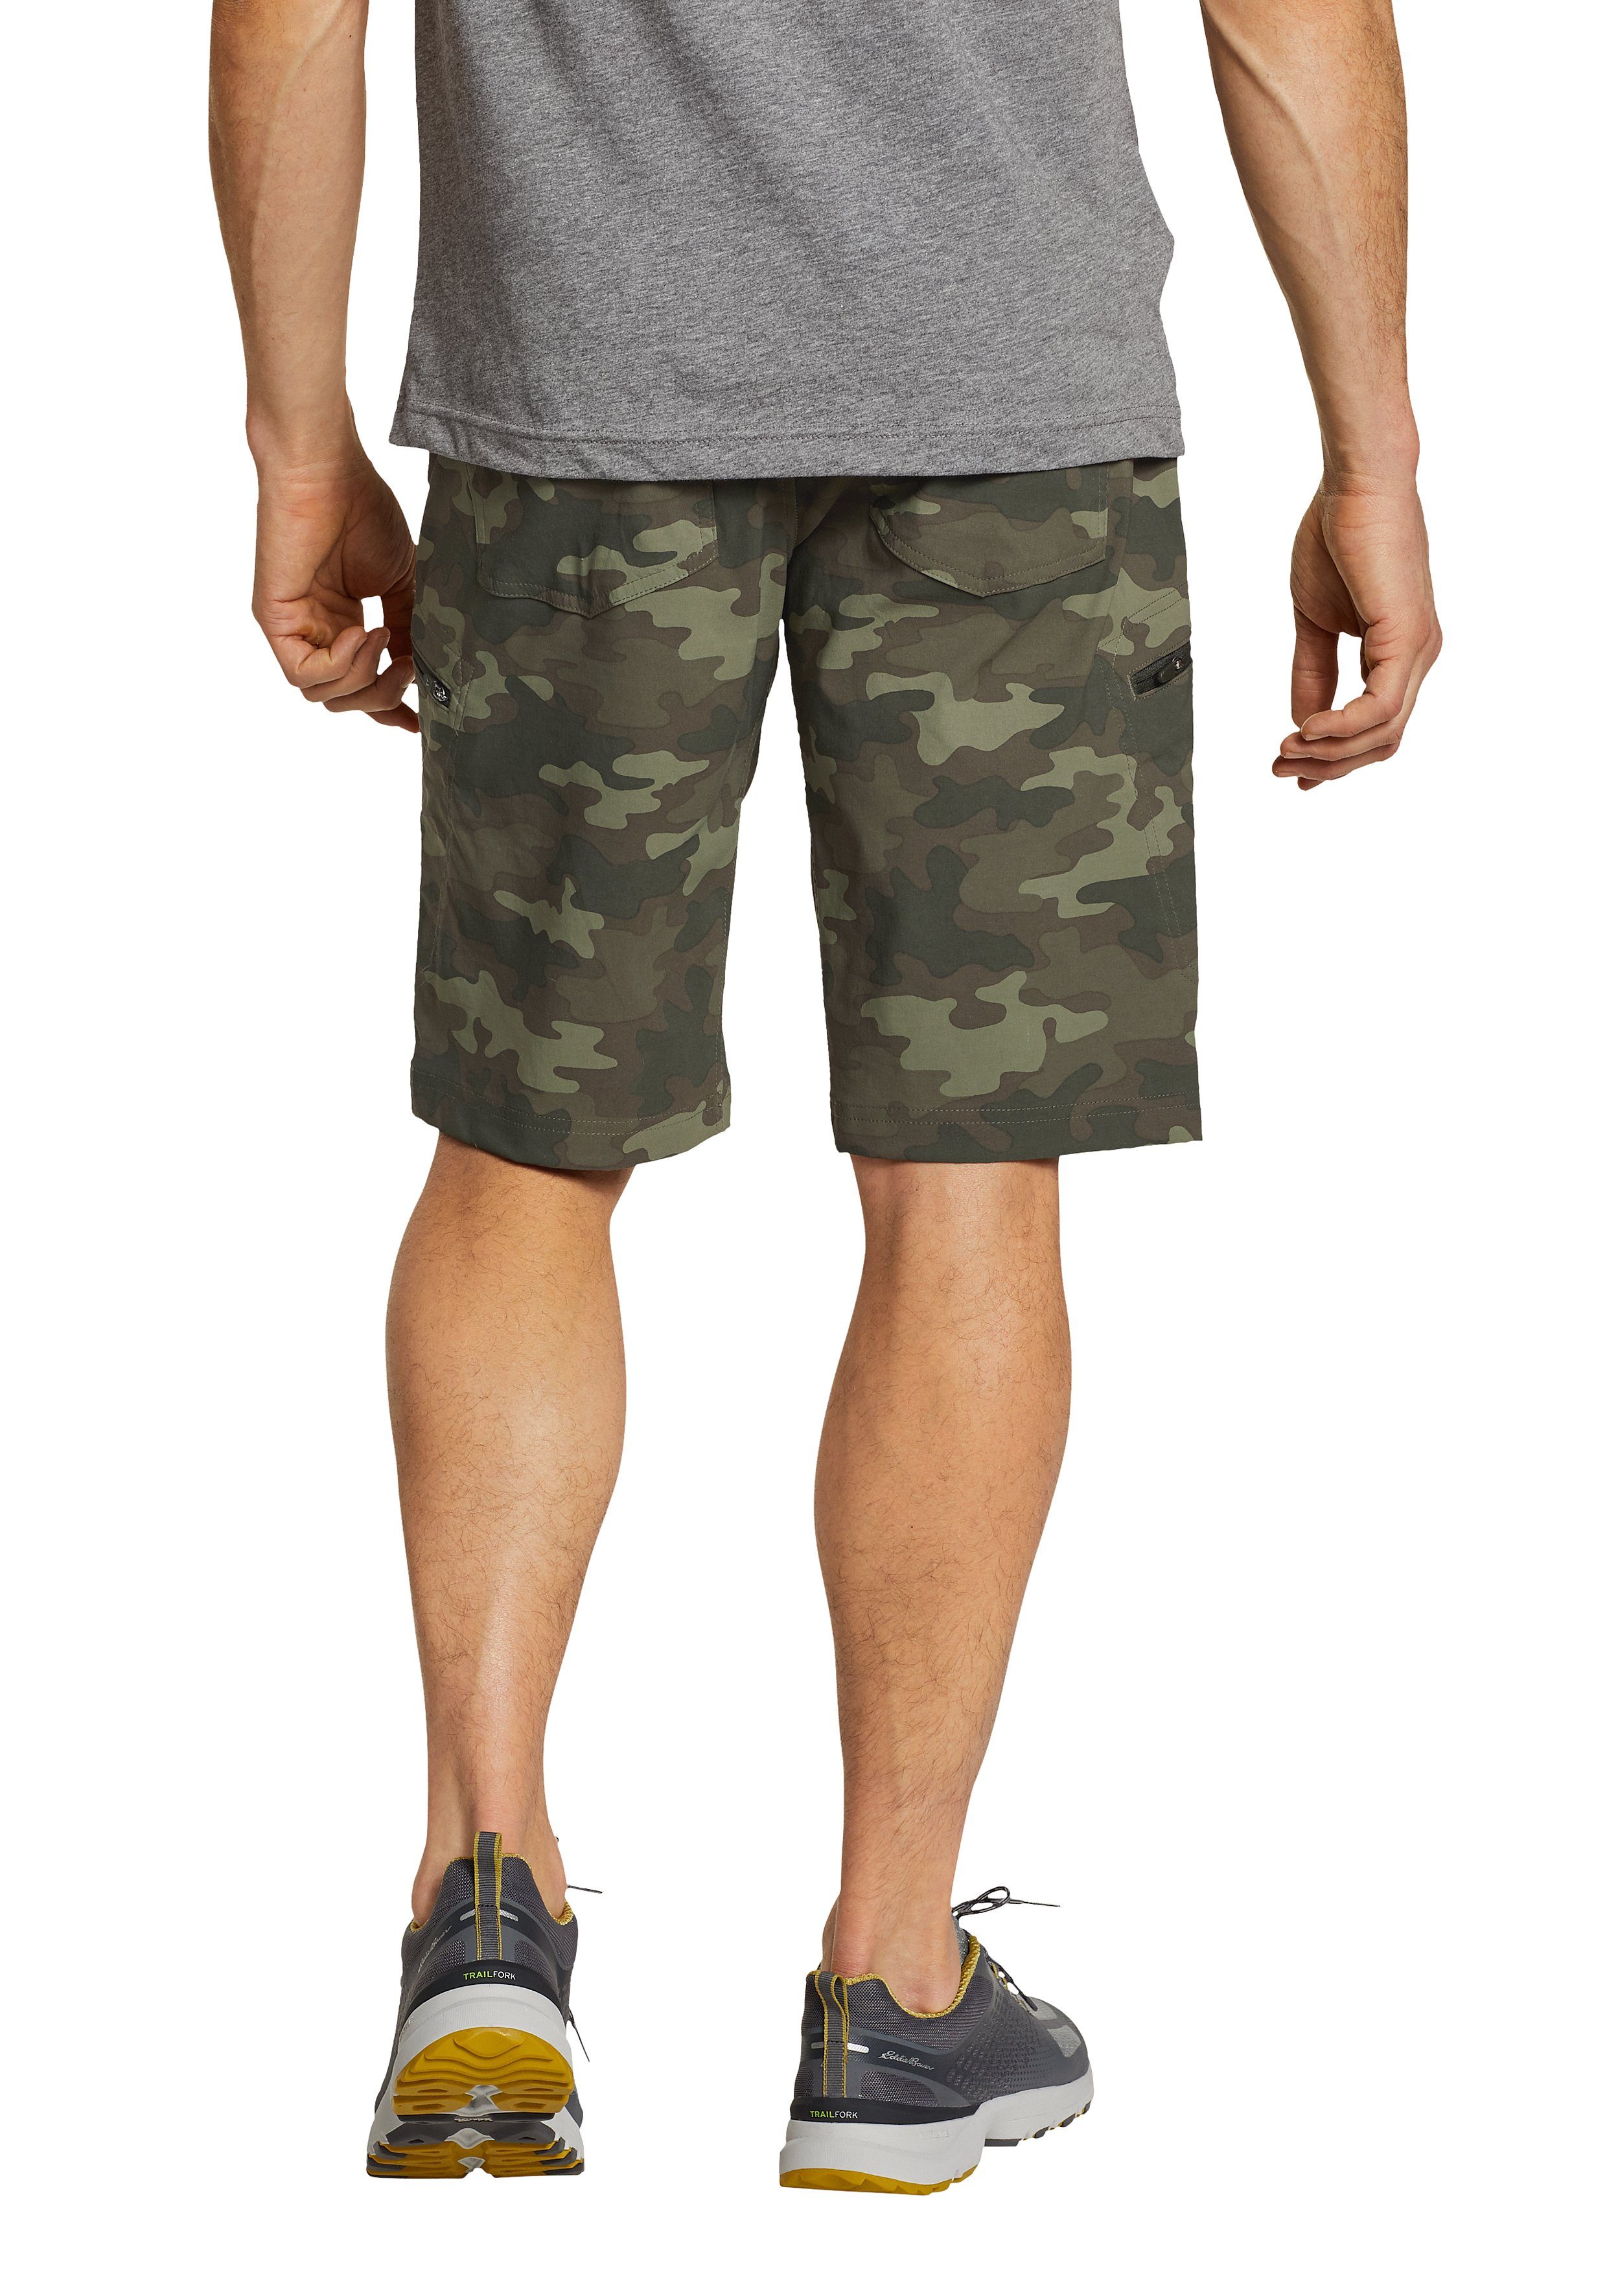 Camouflage Shorts Guide gemustert Eddie Bauer Pro - Shorts